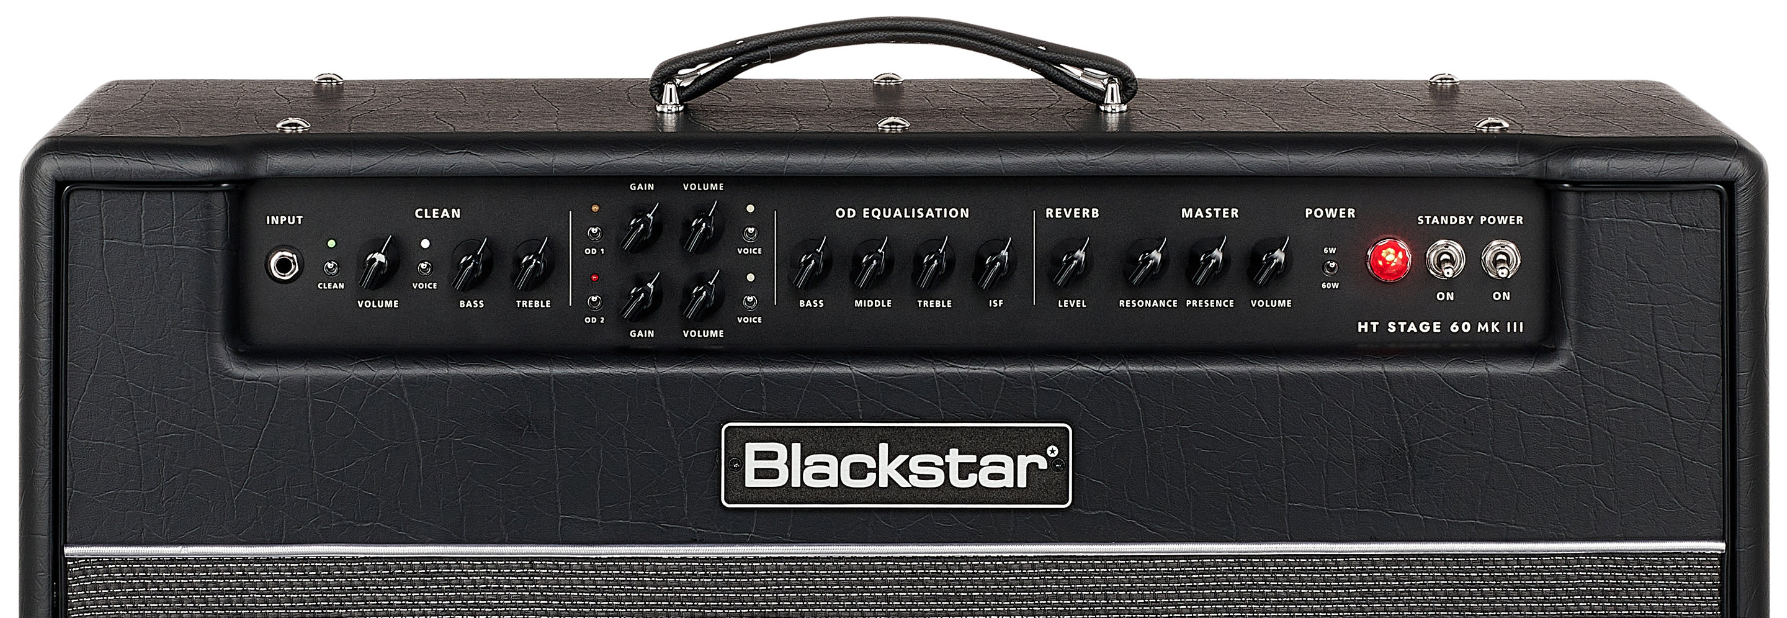 Blackstar Ht Venue Stage 60 212 Mkiii 60w 2x12 El34 - Electric guitar combo amp - Variation 3